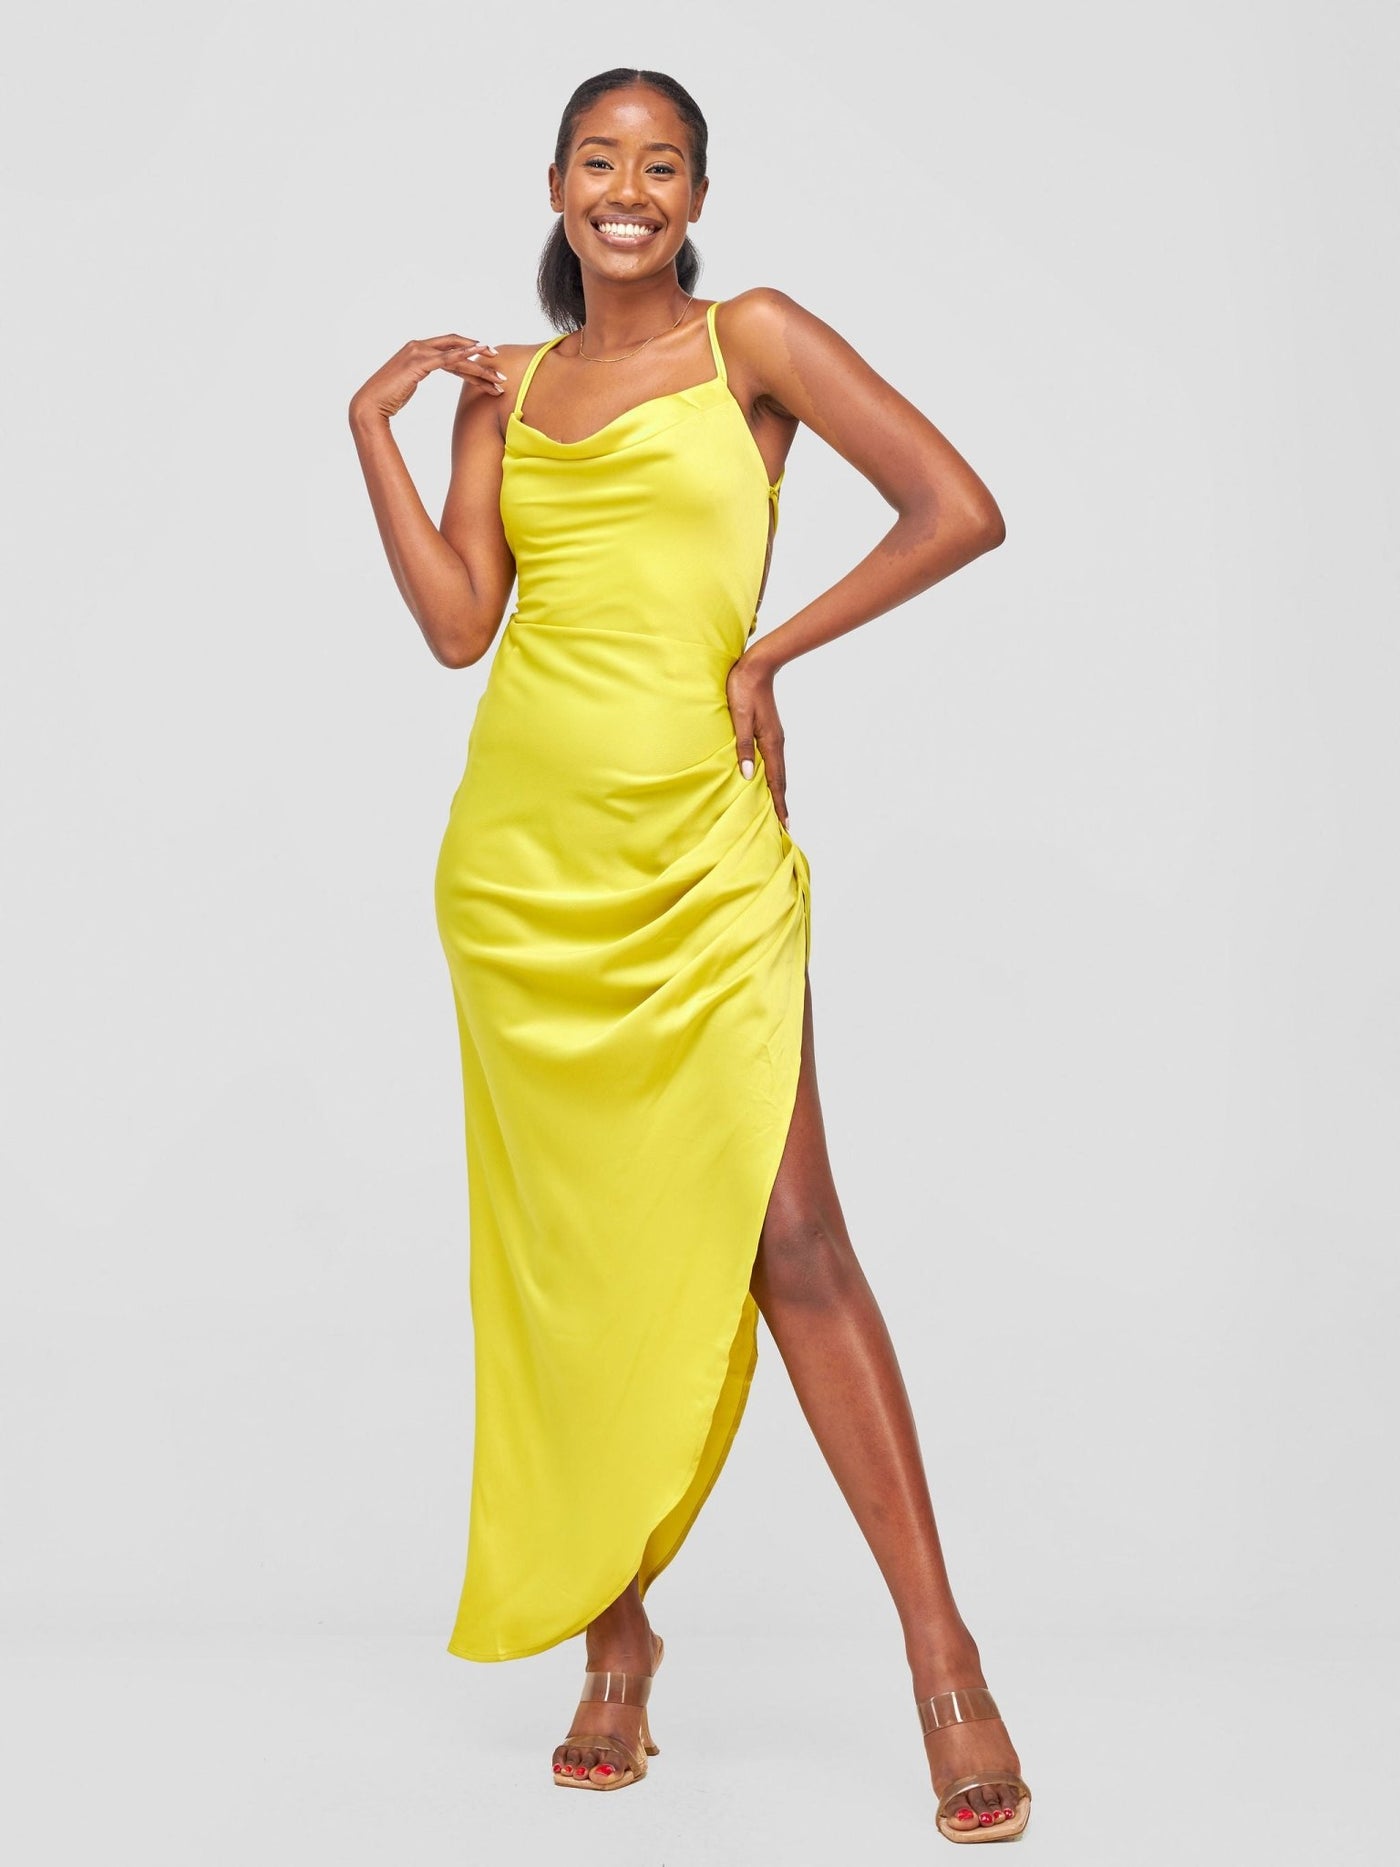 Lola Backless Strappy Satin Dress With High Side Slit - Lime - Shopzetu